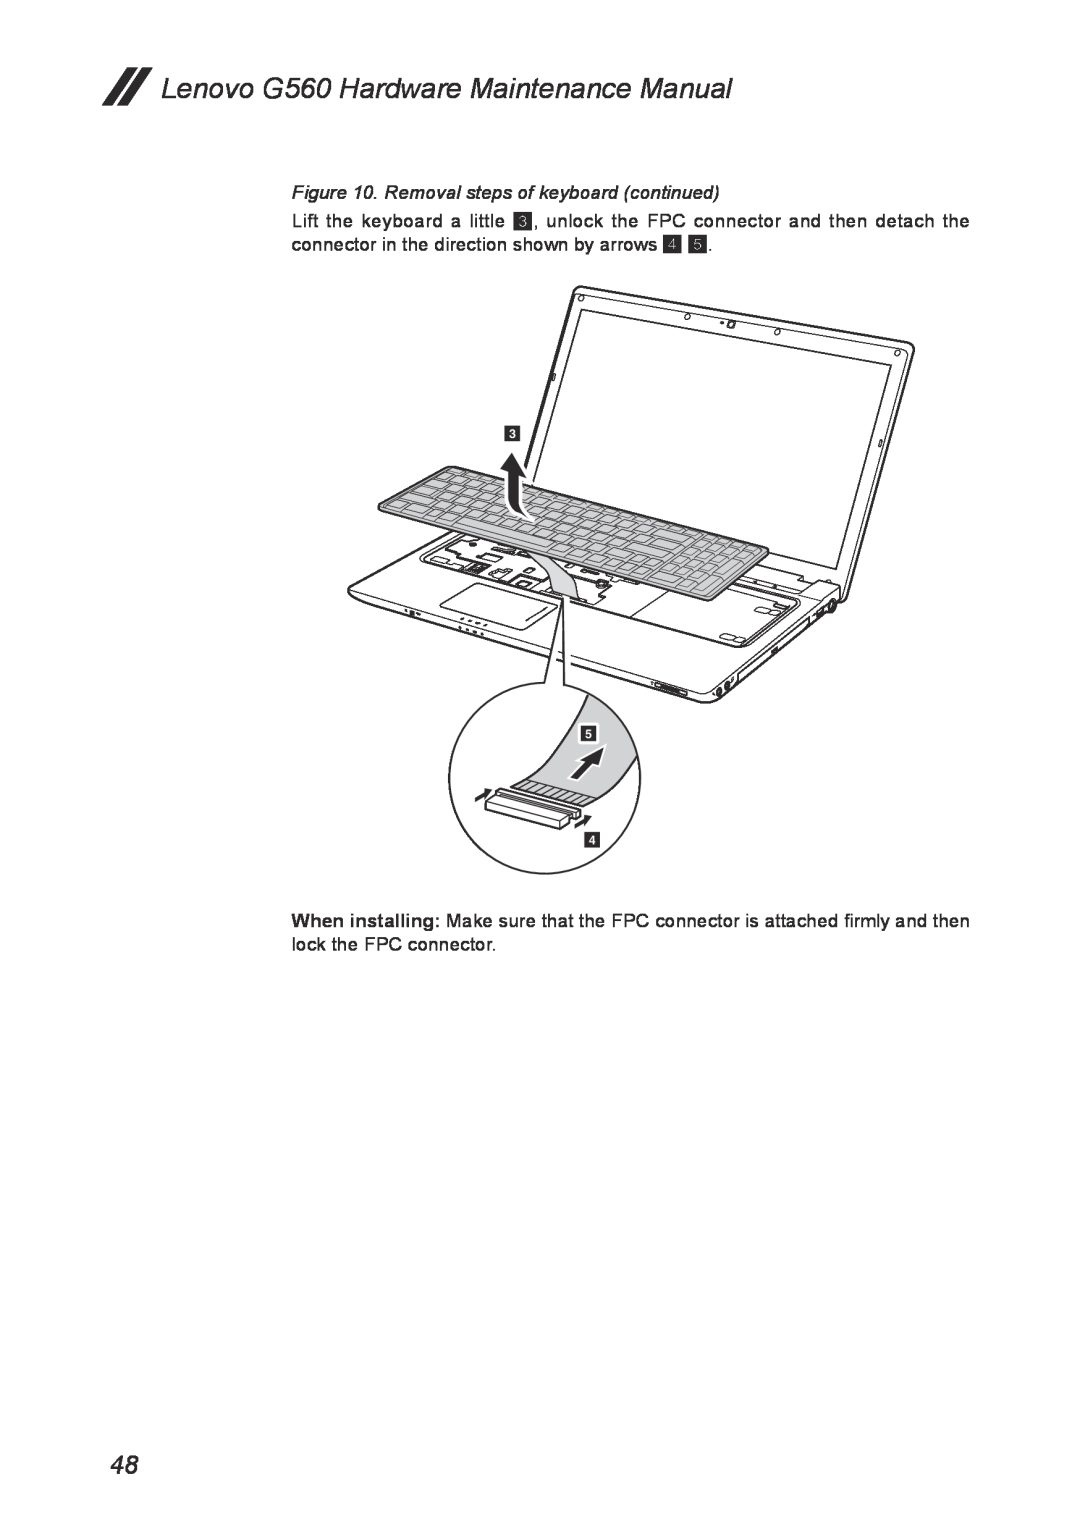 Lenovo manual Lenovo G560 Hardware Maintenance Manual, Removal steps of keyboard continued 